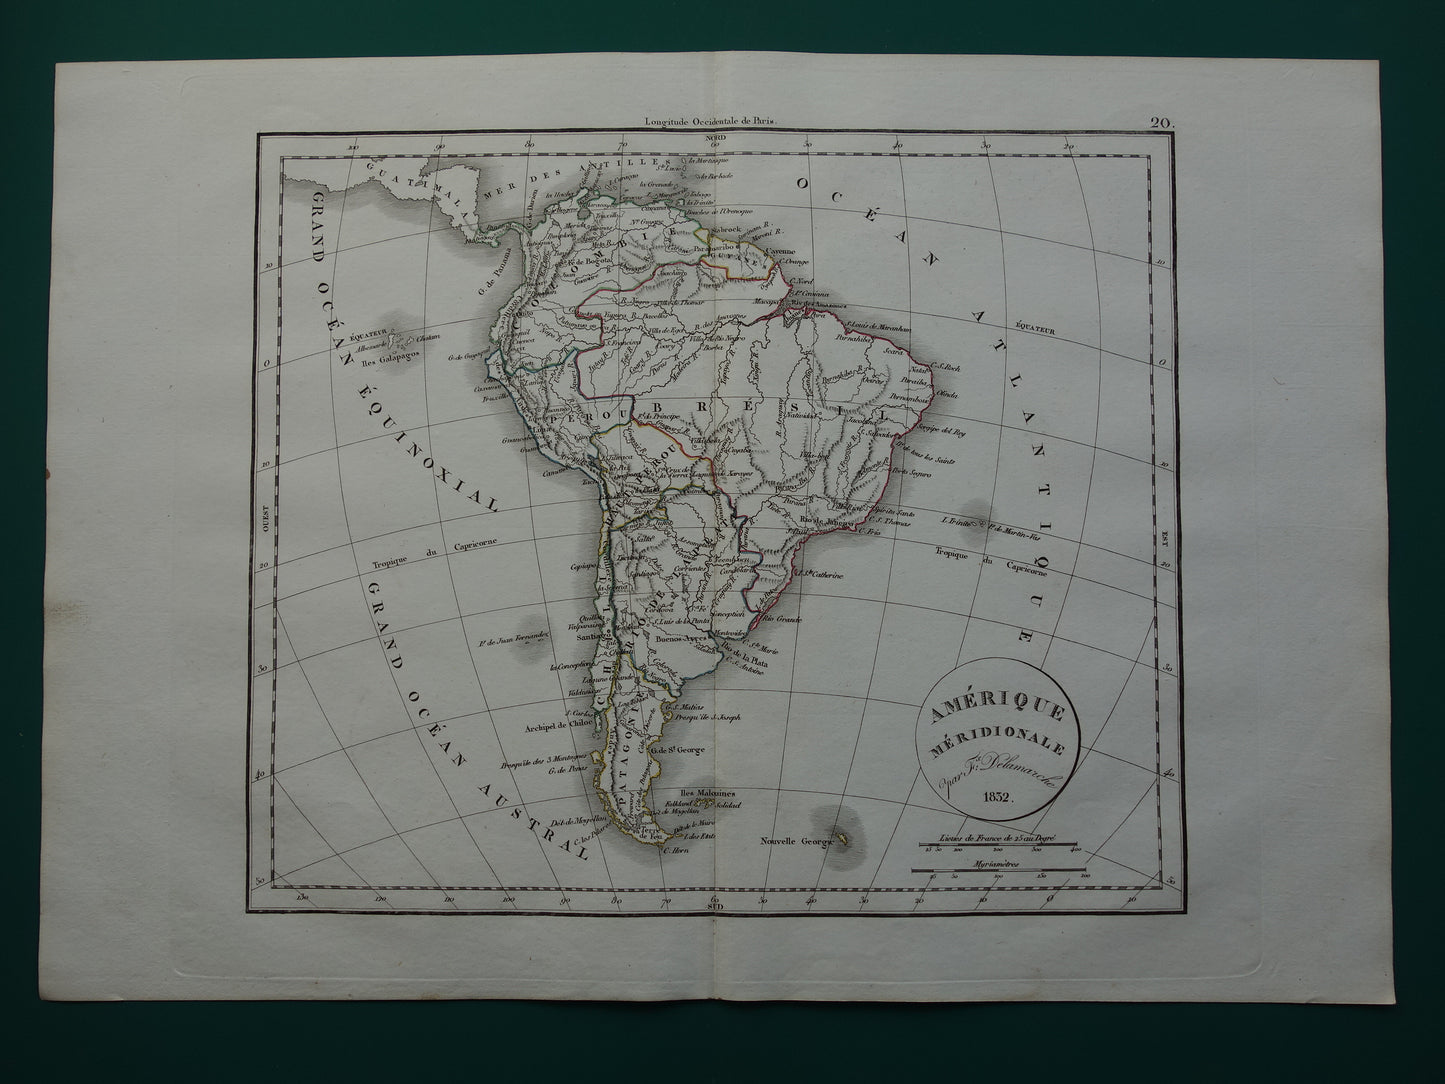 Zuid-Amerika oude landkaart van continent Zuid-Amerika - originele antieke kaart uit 1832